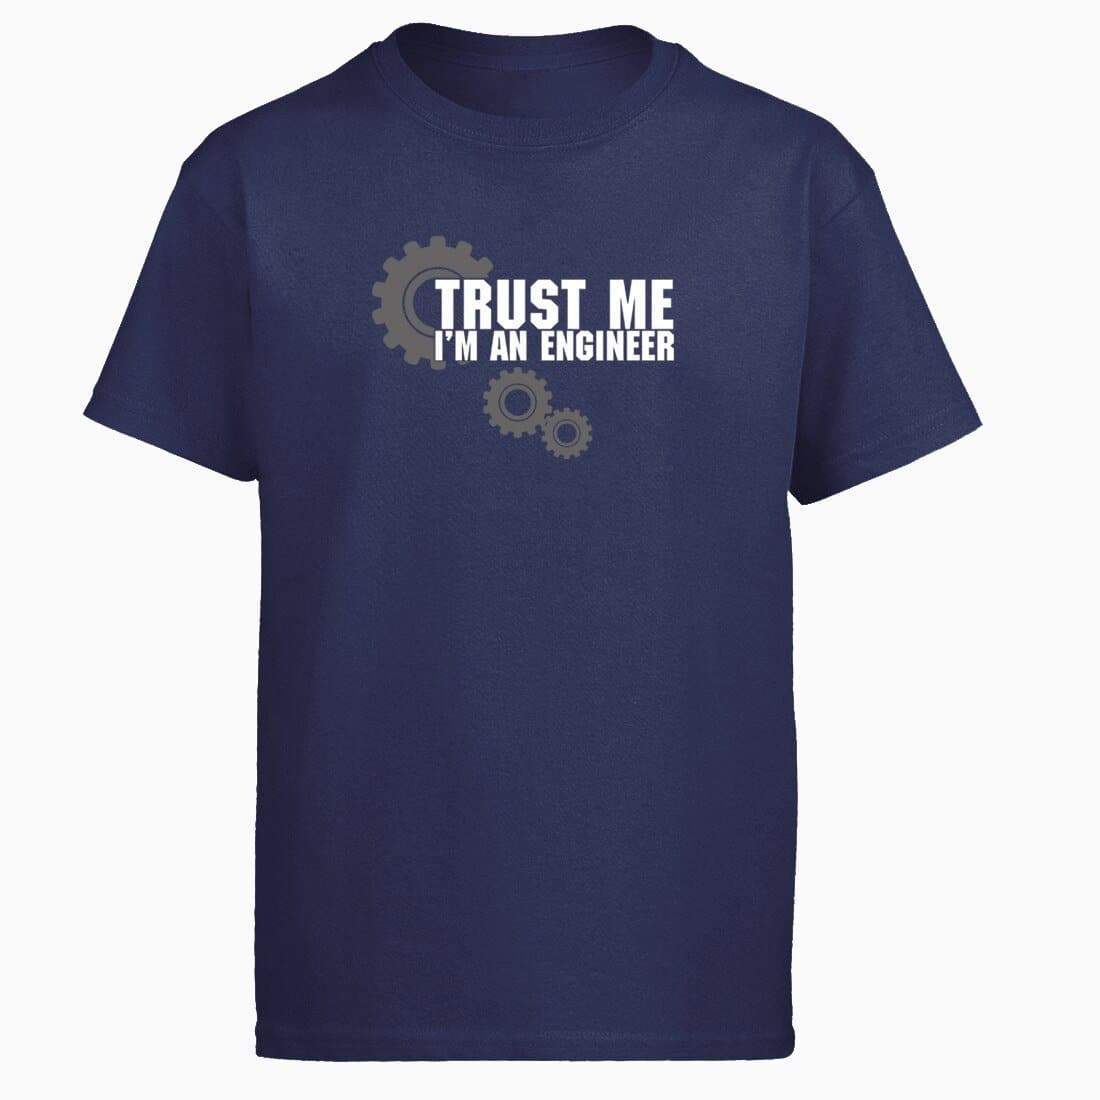 T-Shirt Navy Blue / S "Trust Me I Am An Engineer" T-Shirt - 100% Cotton The Sexy Scientist